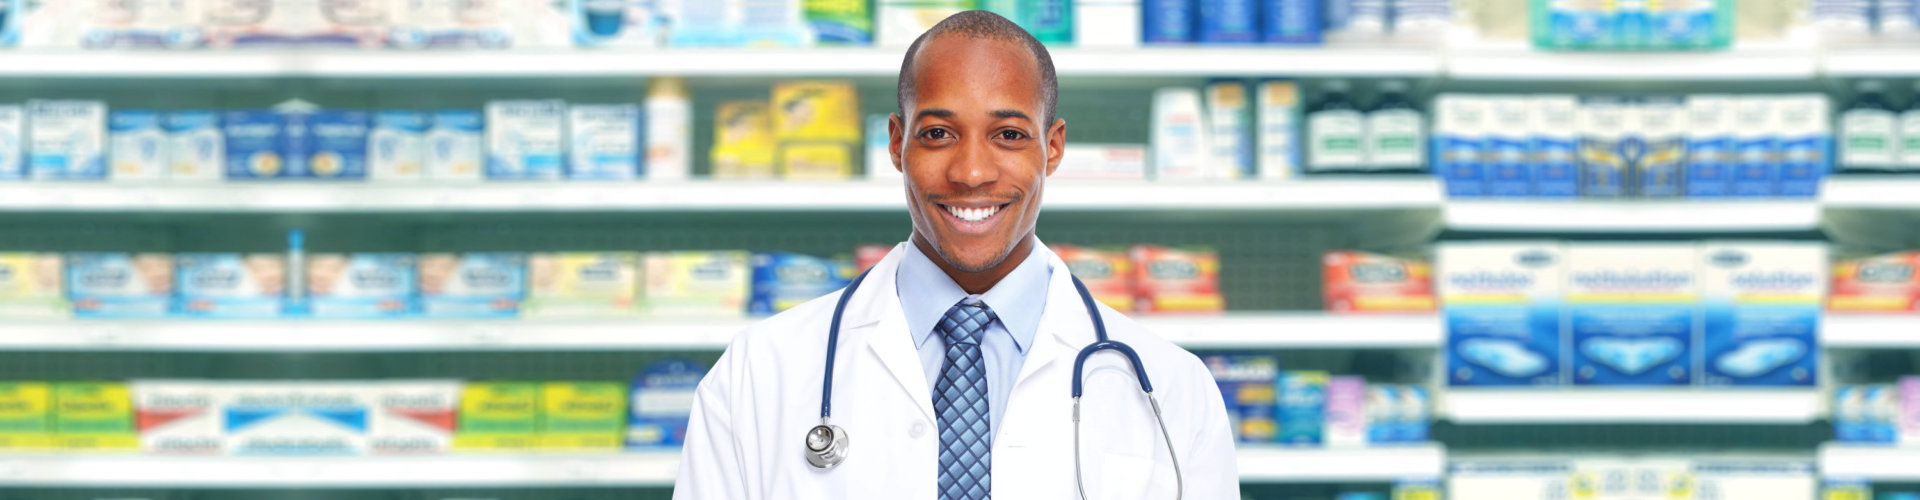 a doctor in pharmacy